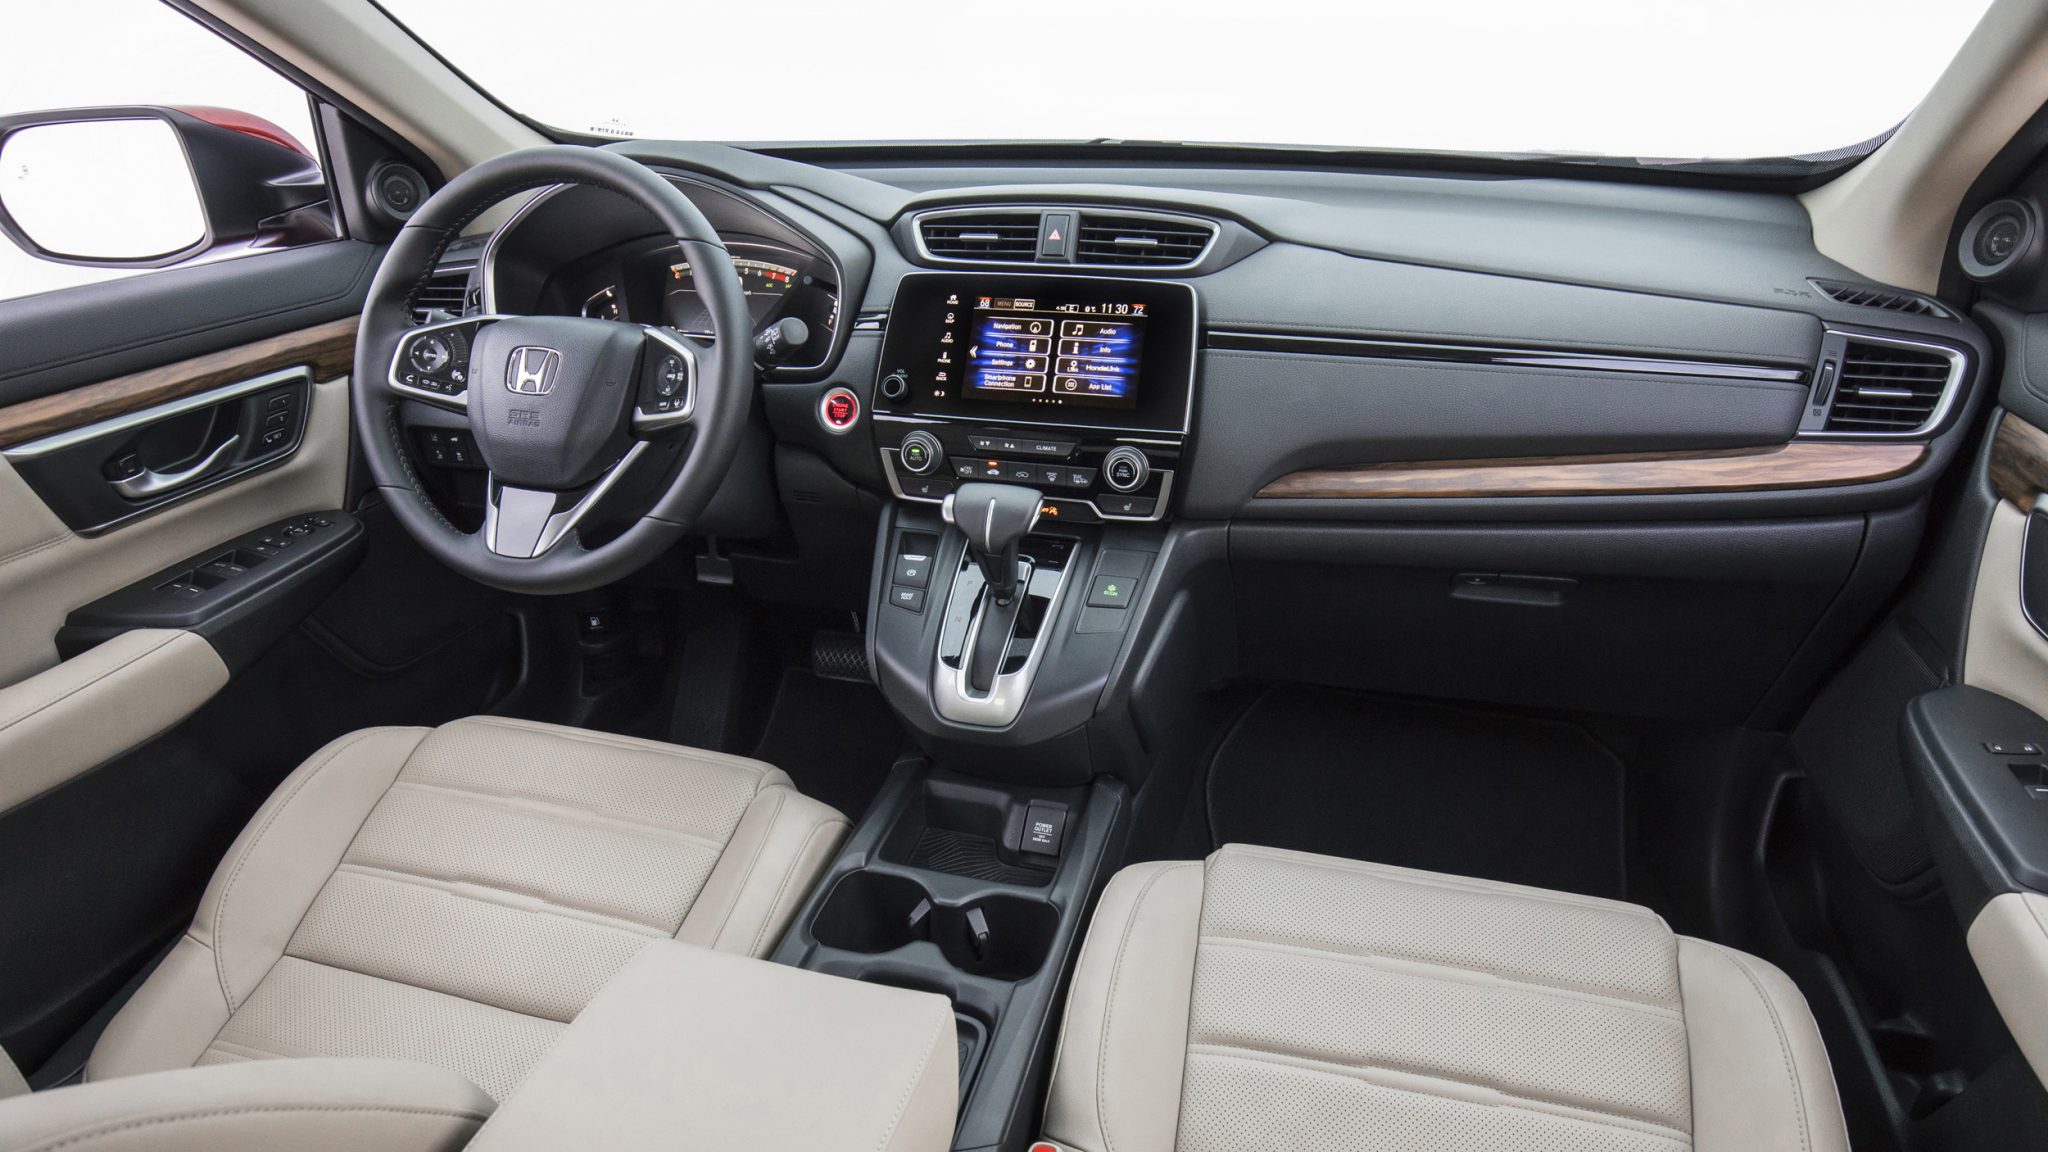 So sánh 3 phiên bản Honda CR-V 2019